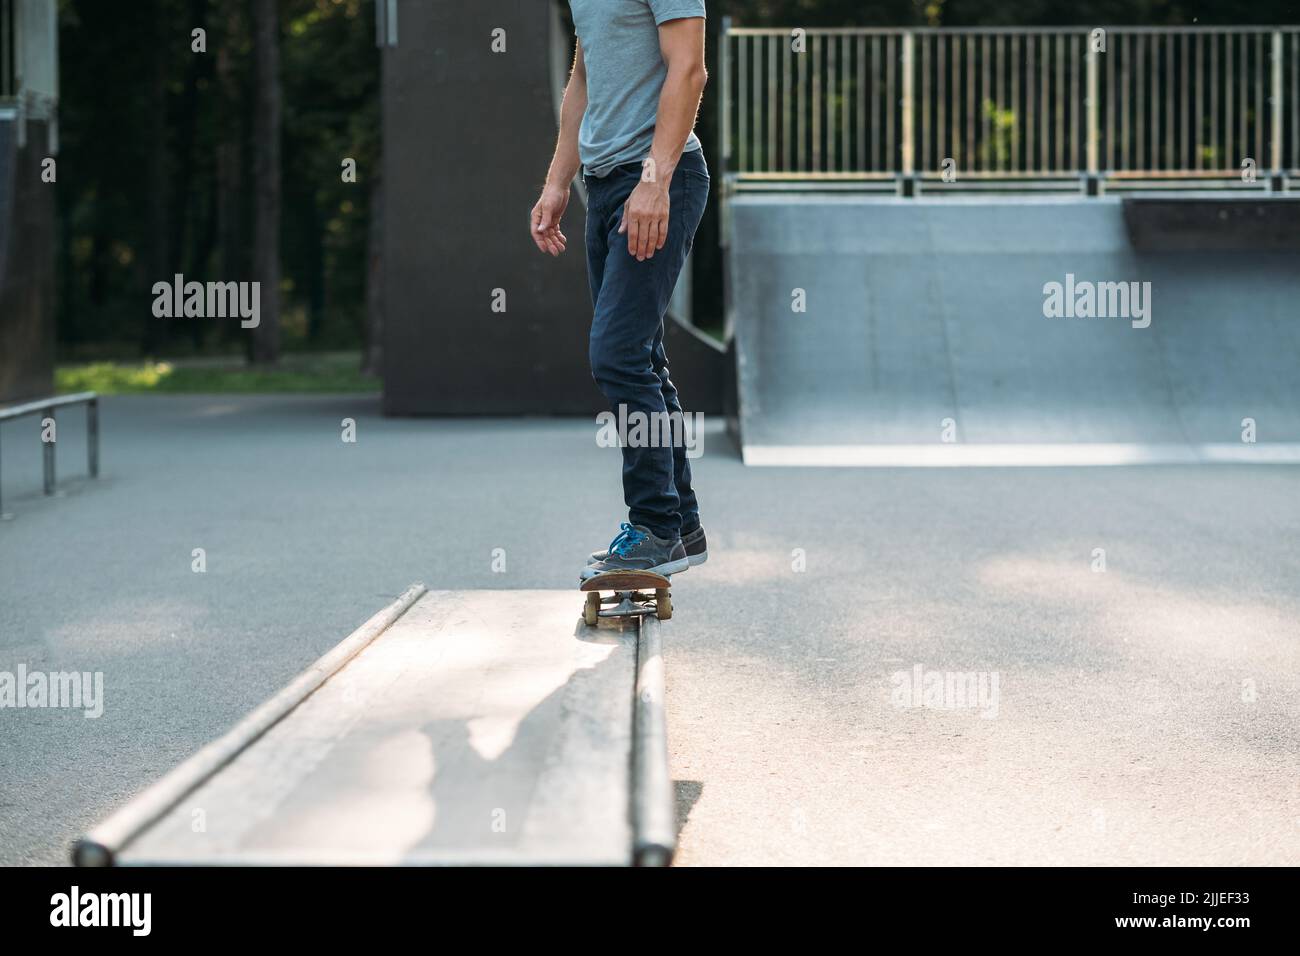 hobby lifestyle leisure practice man skateboard Stock Photo